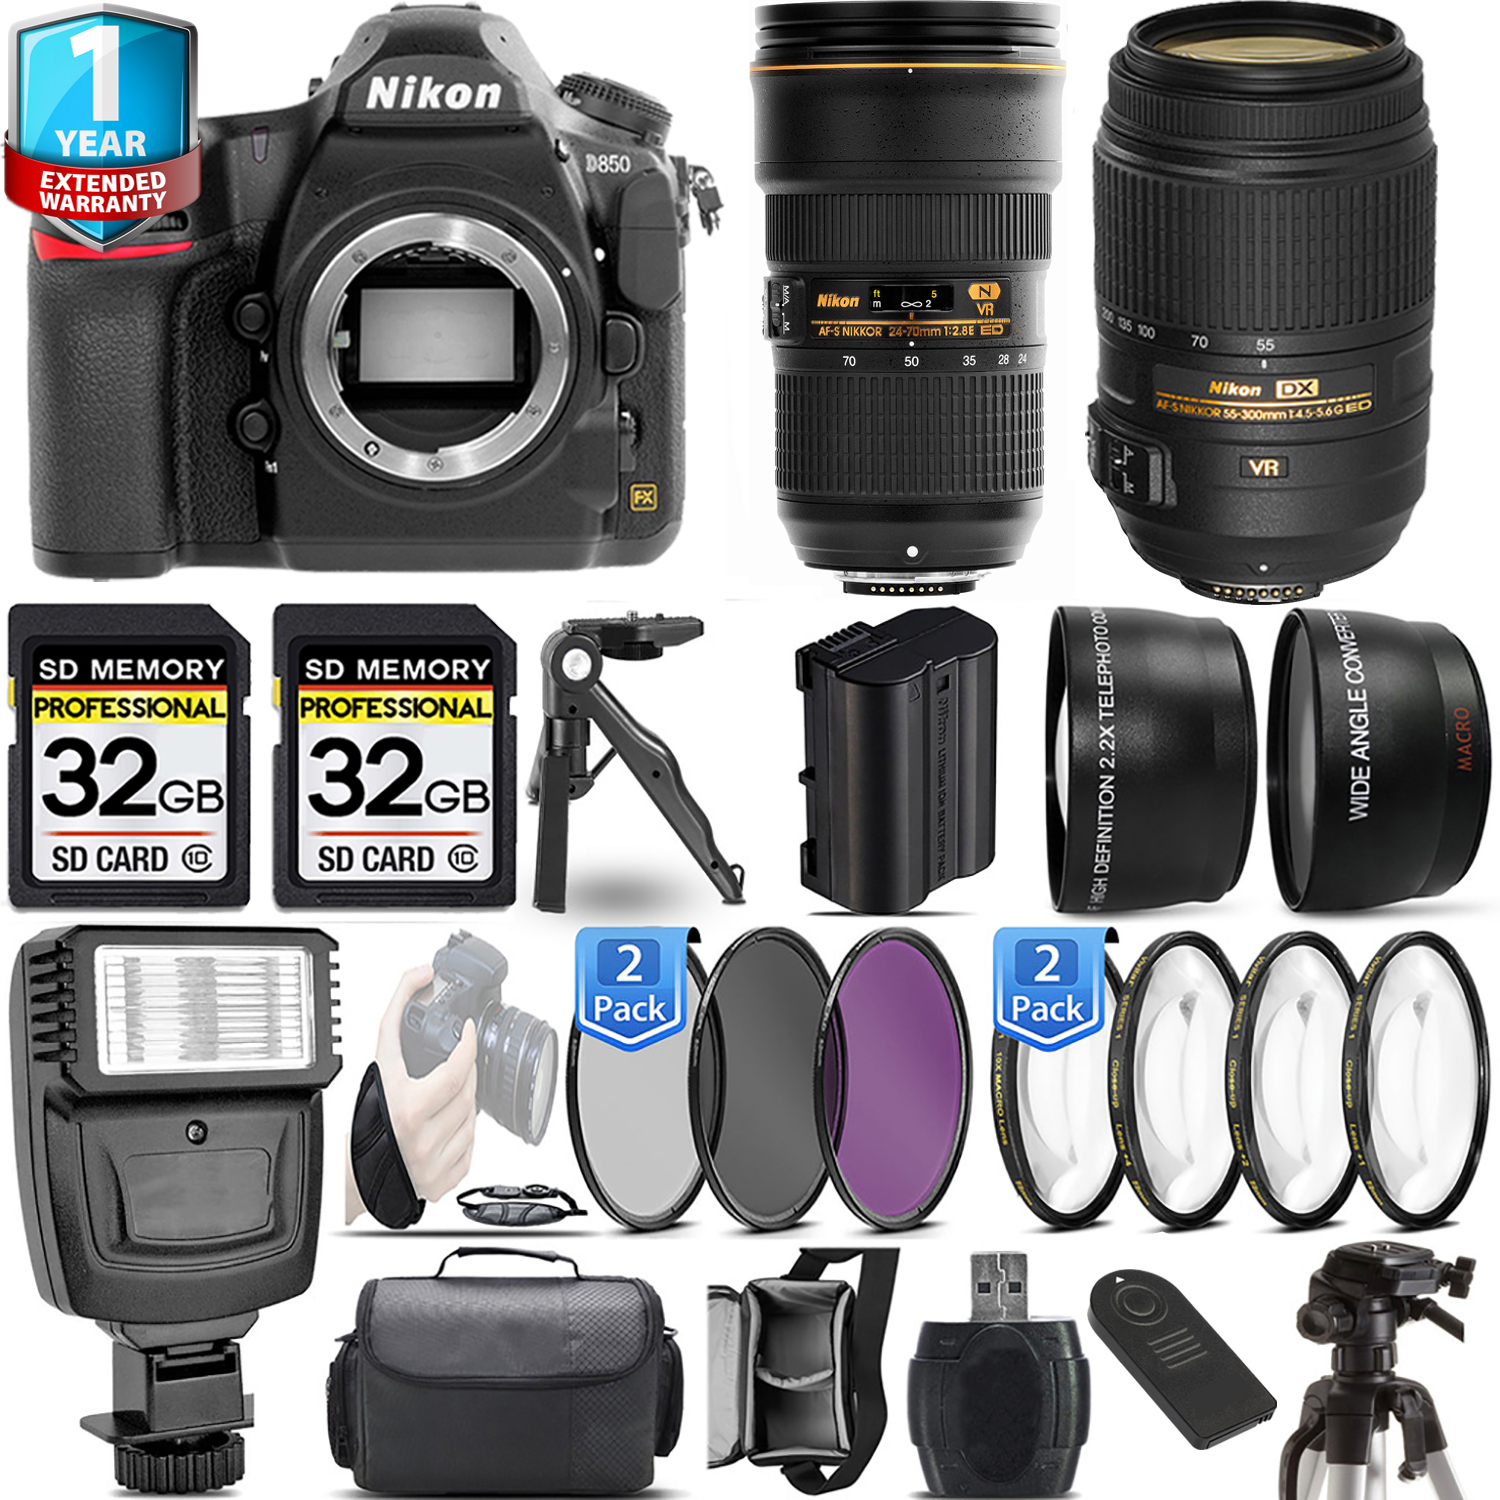 D850 DSLR Camera Camera + 55-300mm +24-70mm + 1yr Warranty+ 64GB Basic Kit *FREE SHIPPING*